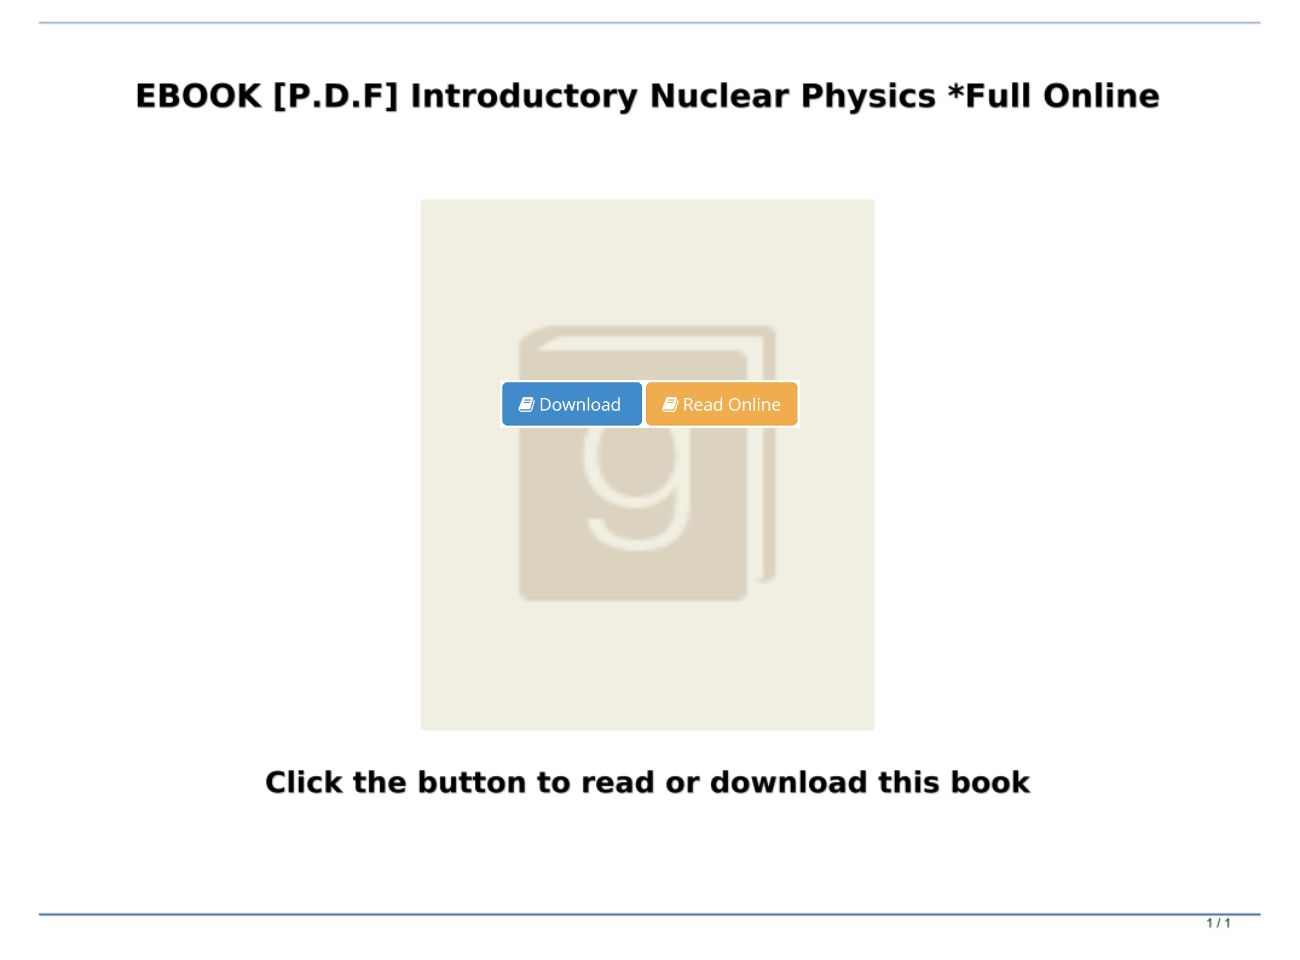 Kenneth krane nuclear physics solutions manual pdf